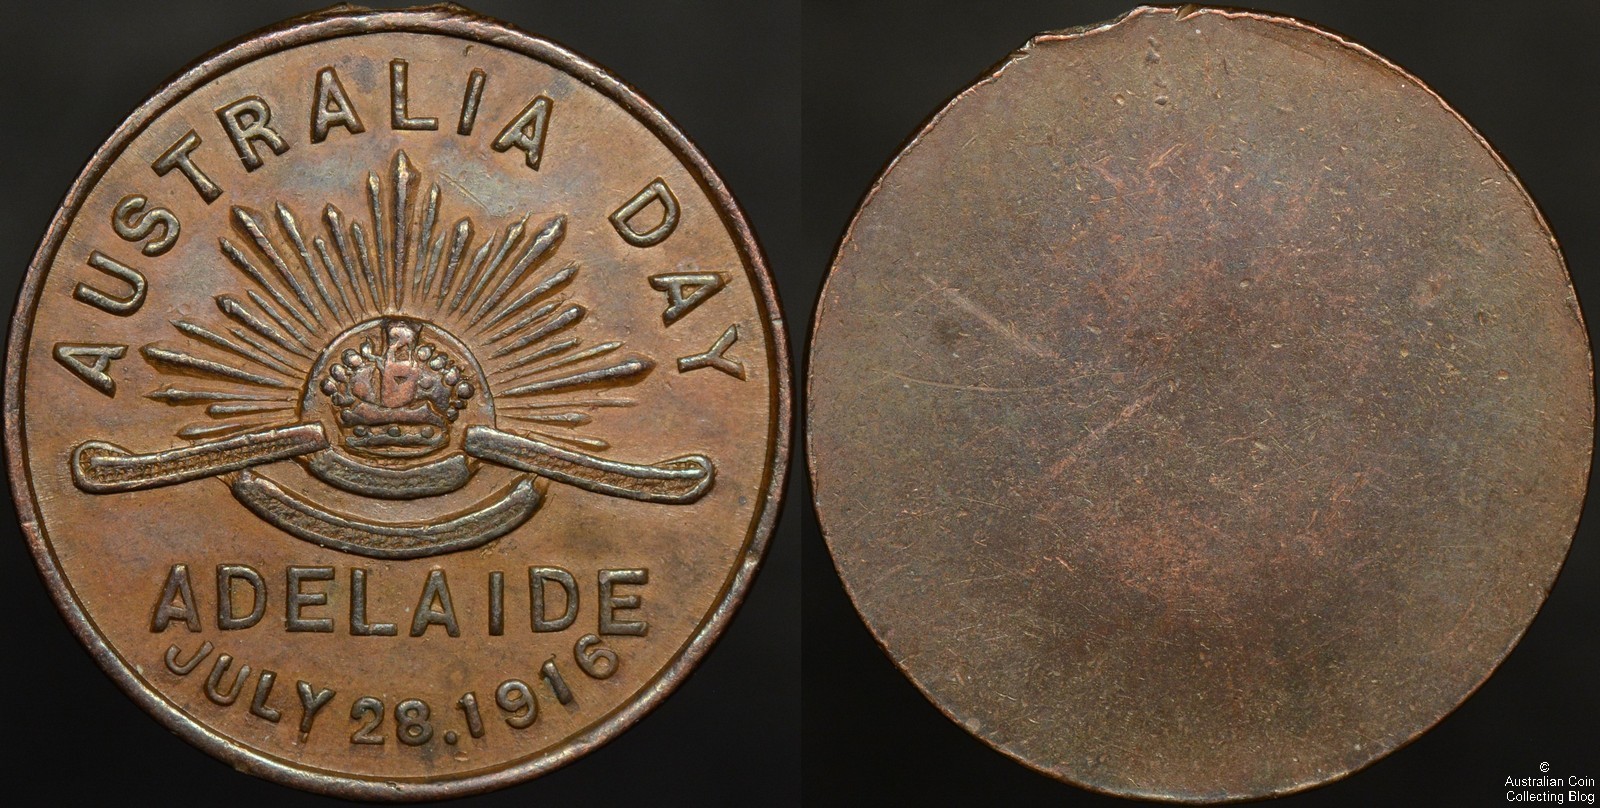 Australia Day Adelaide July 28 1916 Uniface Medal 1916/1